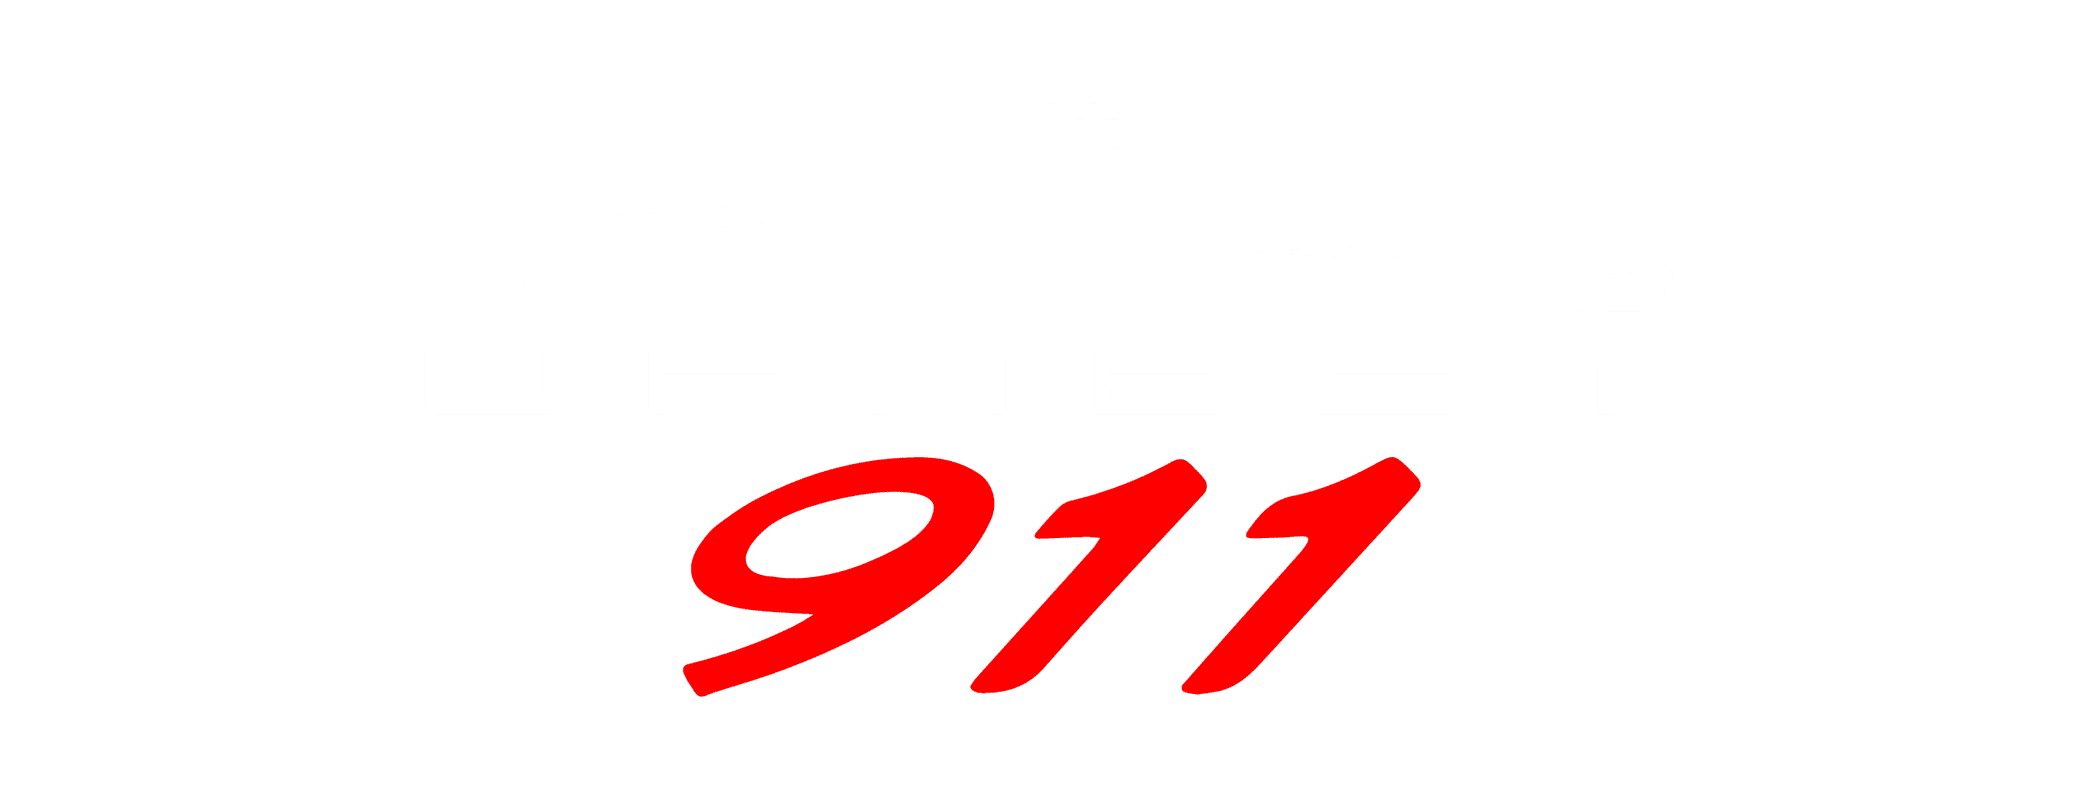 UFABET911 logo